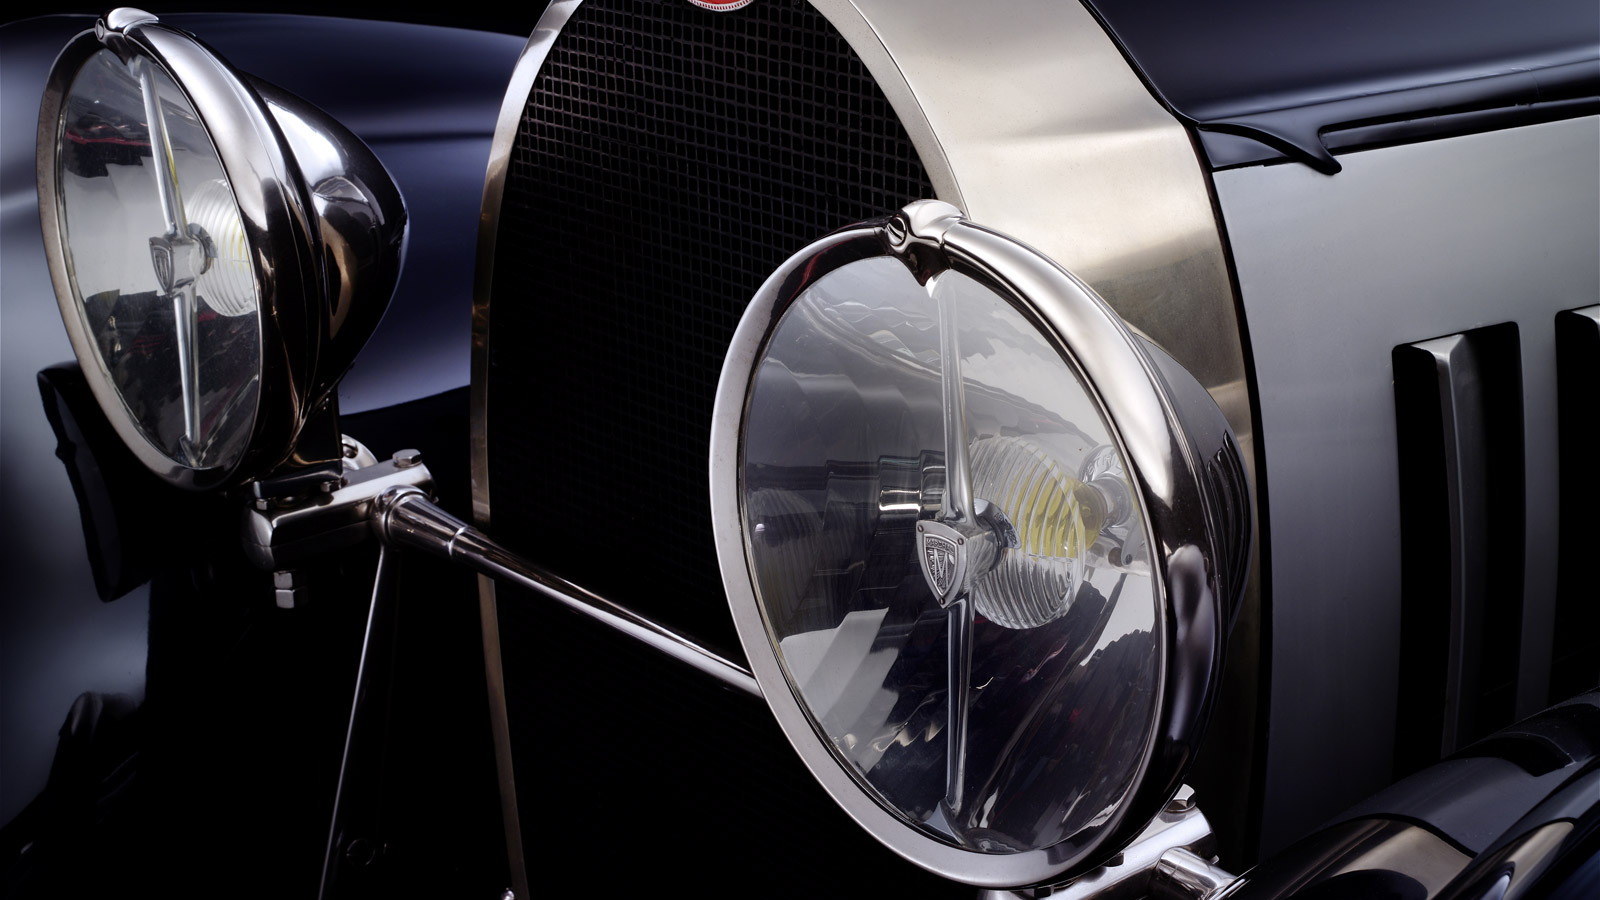 1932 Bugatti Royale (Type 41)